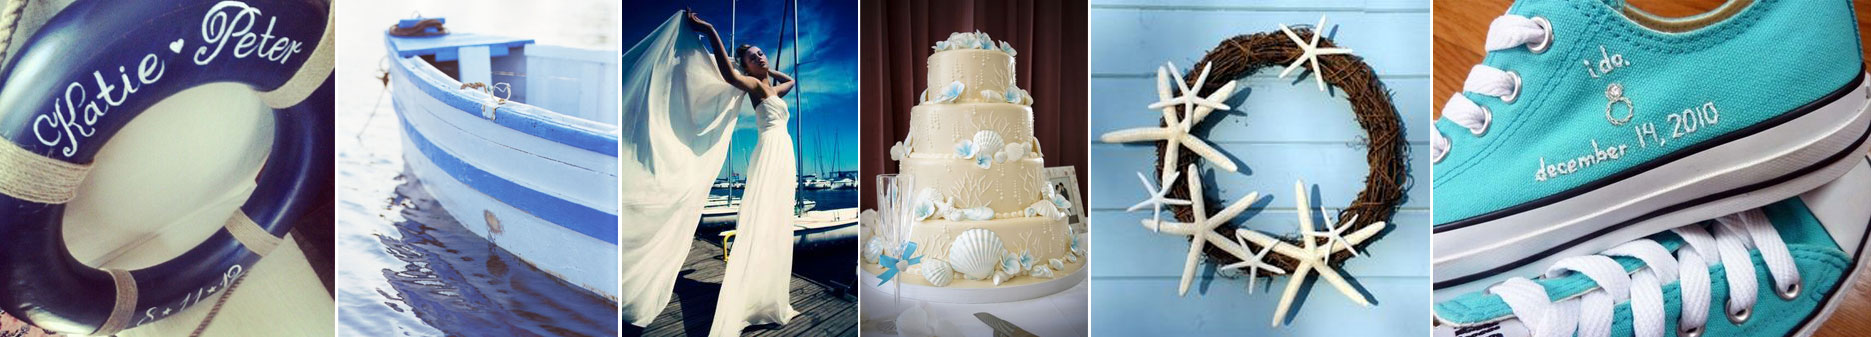 poradnik ślubny wedding planner'ki - kolor morski na ślub inspiracje